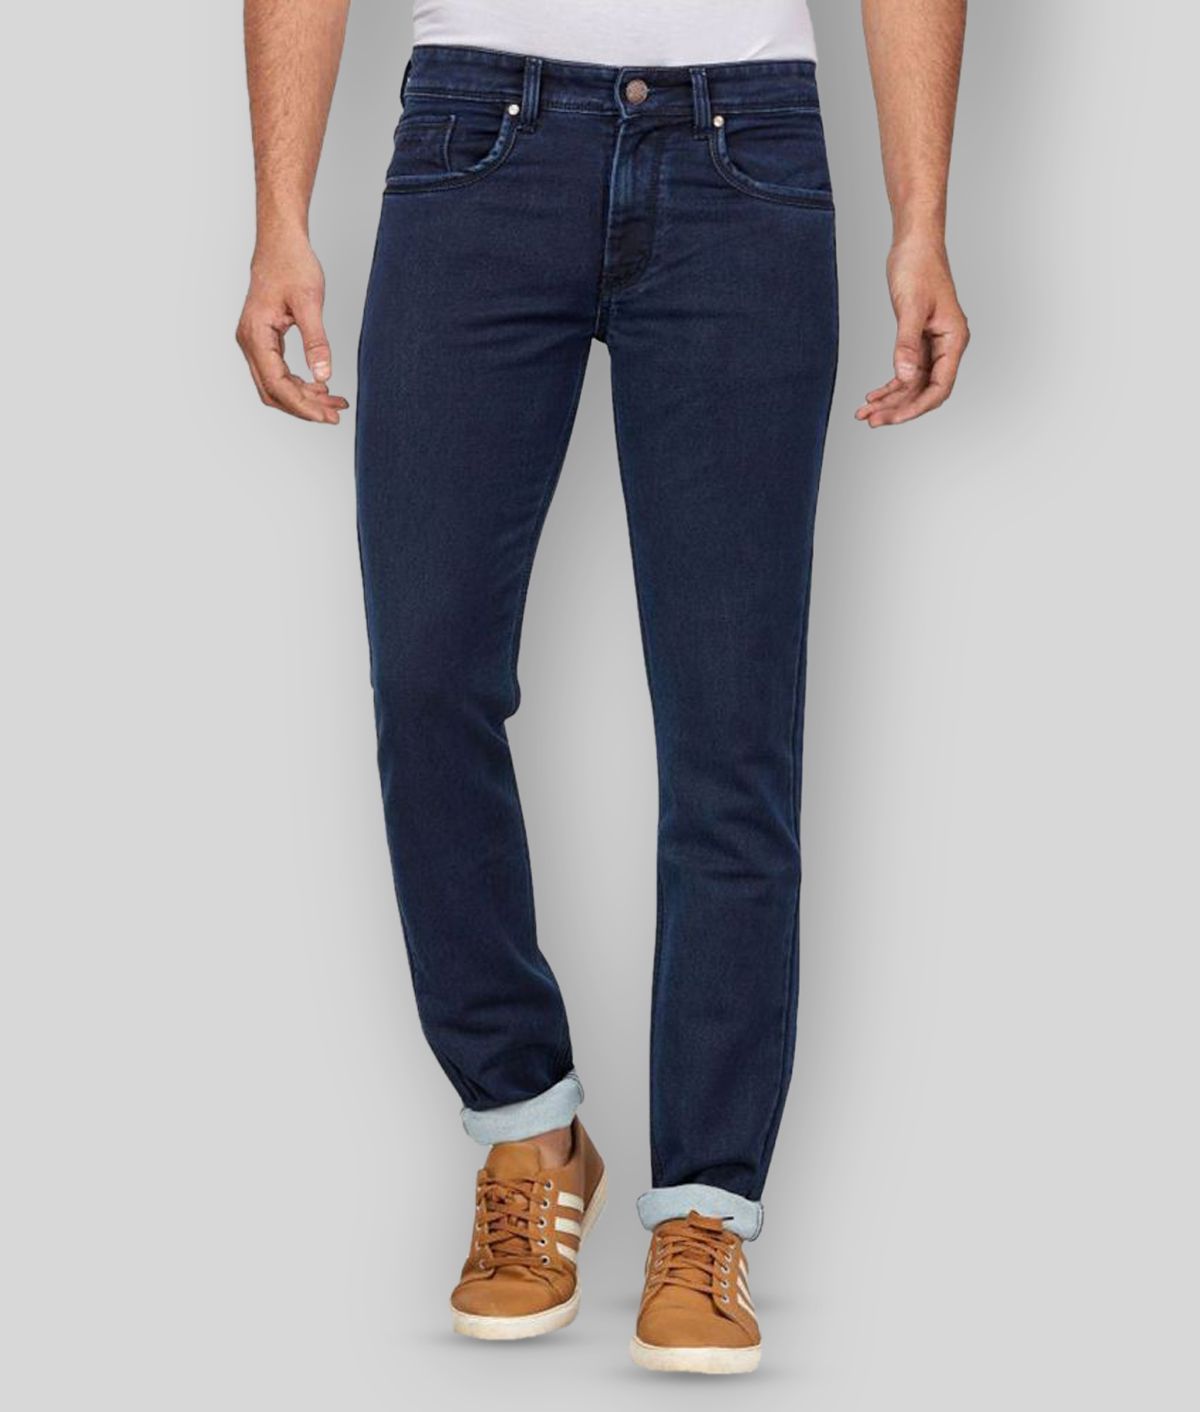 HJ HASASI - Blue Cotton Blend Regular Fit Men's Jeans ( Pack of 1 )